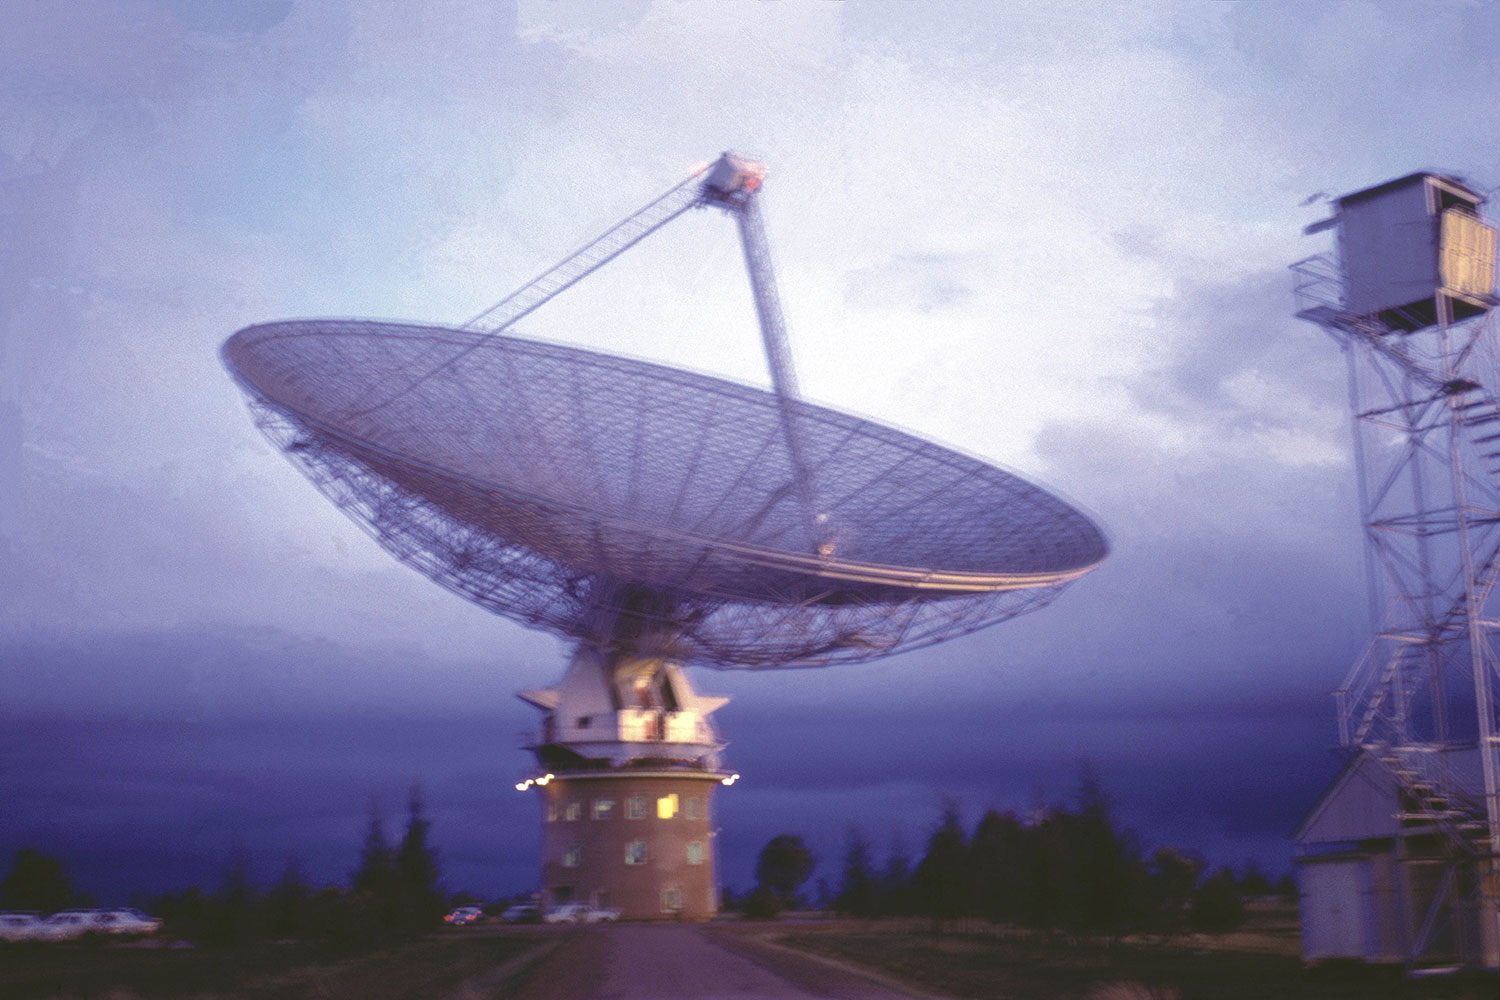 the Parkes radio telescope